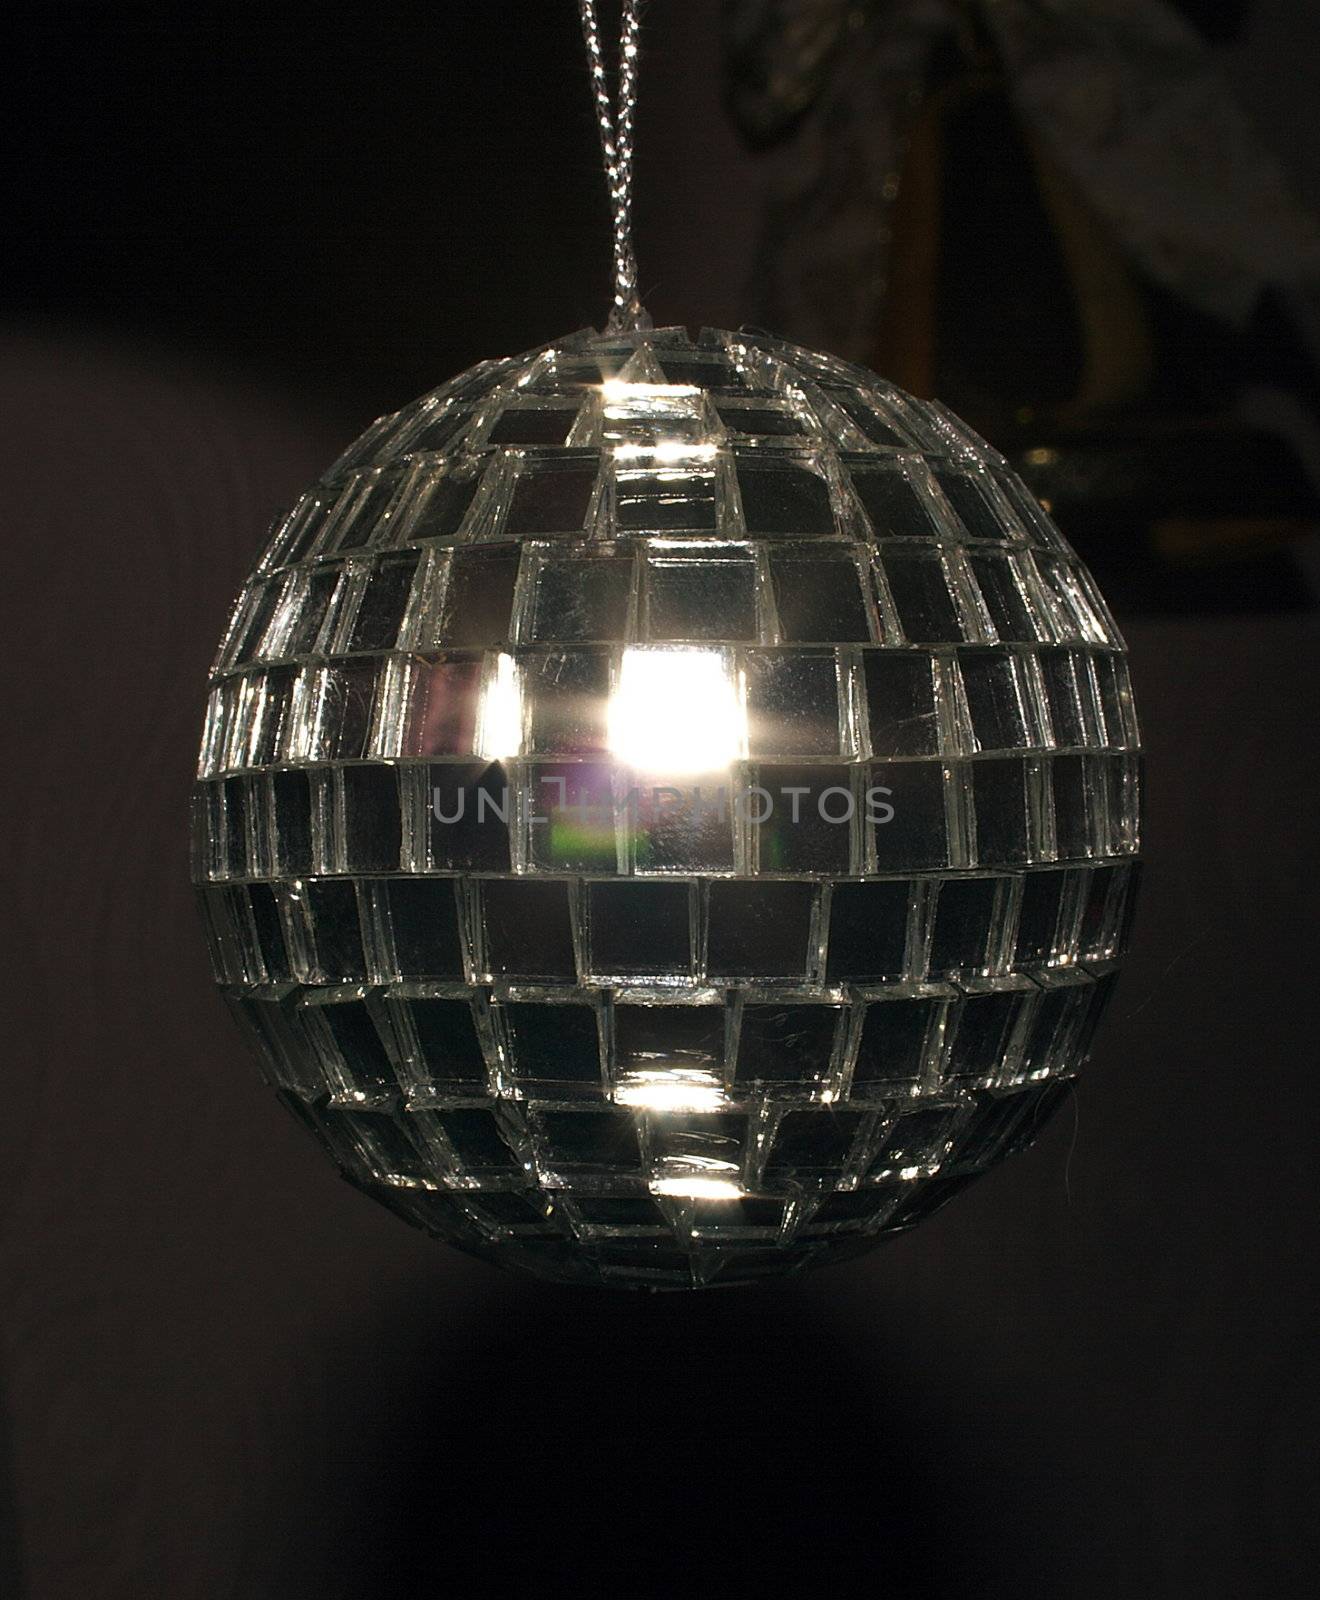 disco ball over a dark background